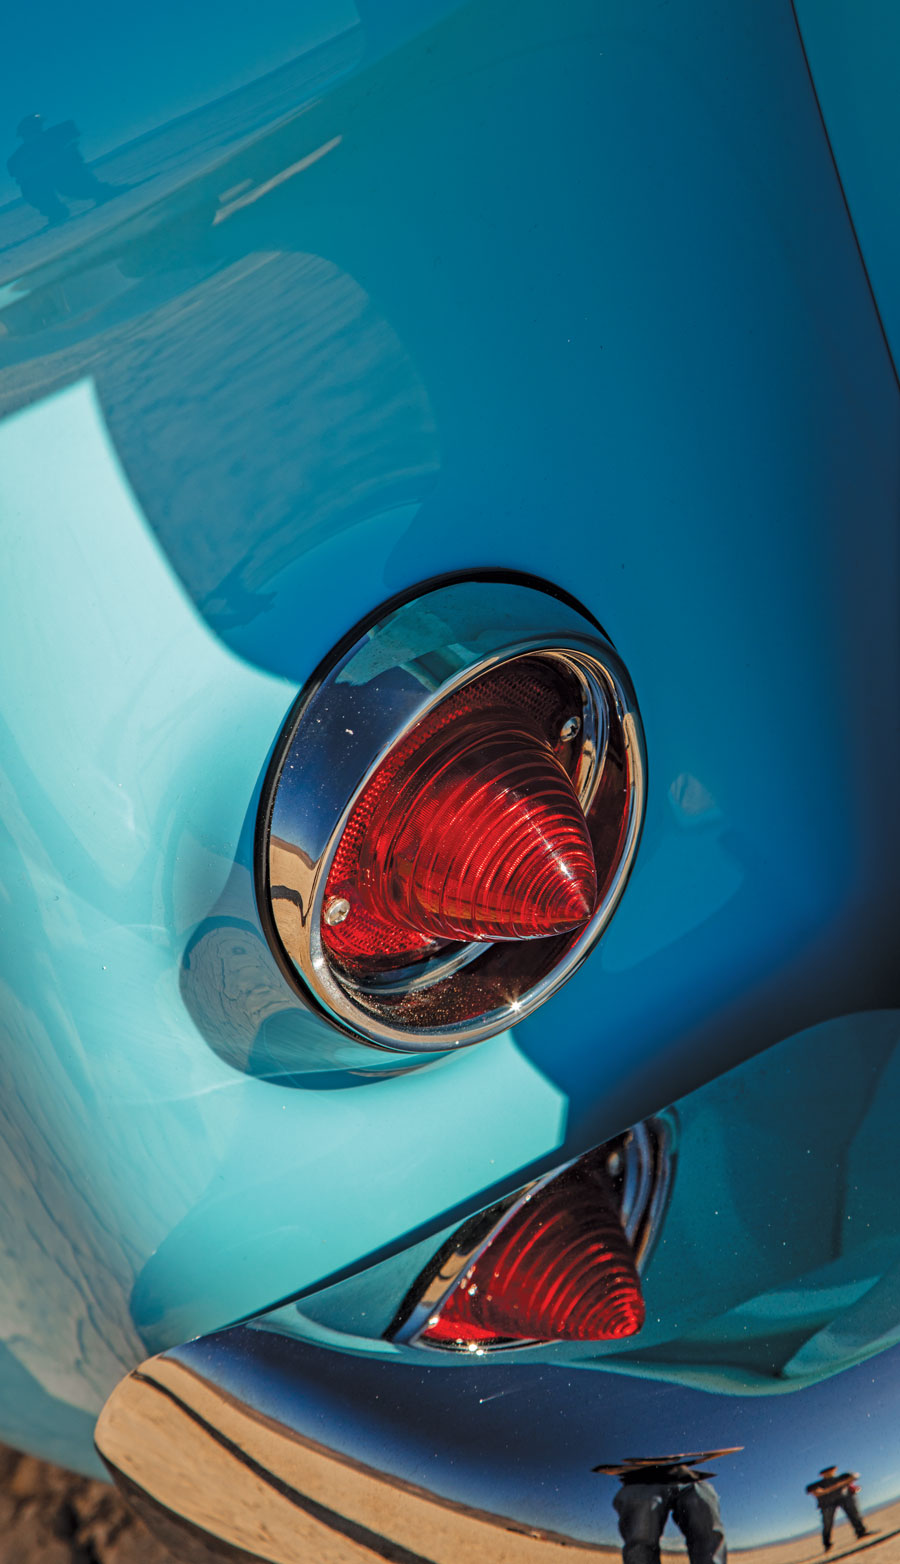 '58 Chevy Apache tail light closeup